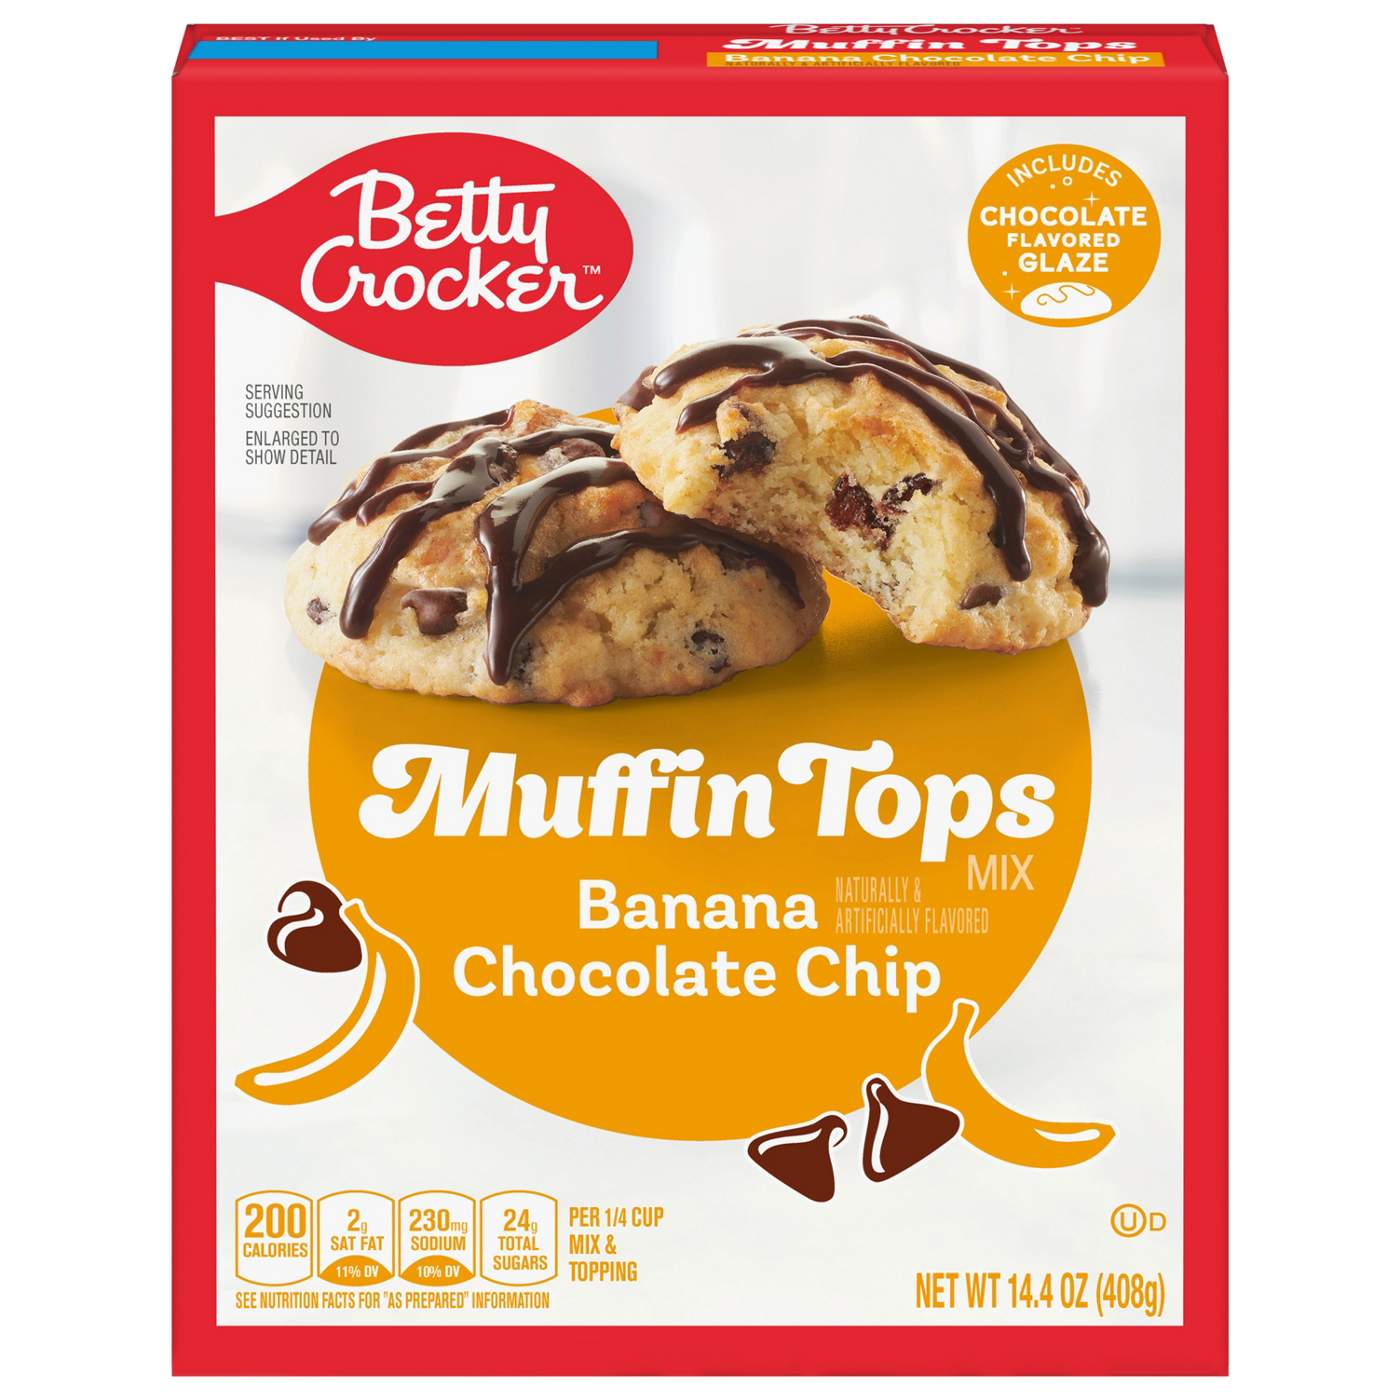 Betty Crocker Banana Chocolate Chip Muffin Tops; image 1 of 2